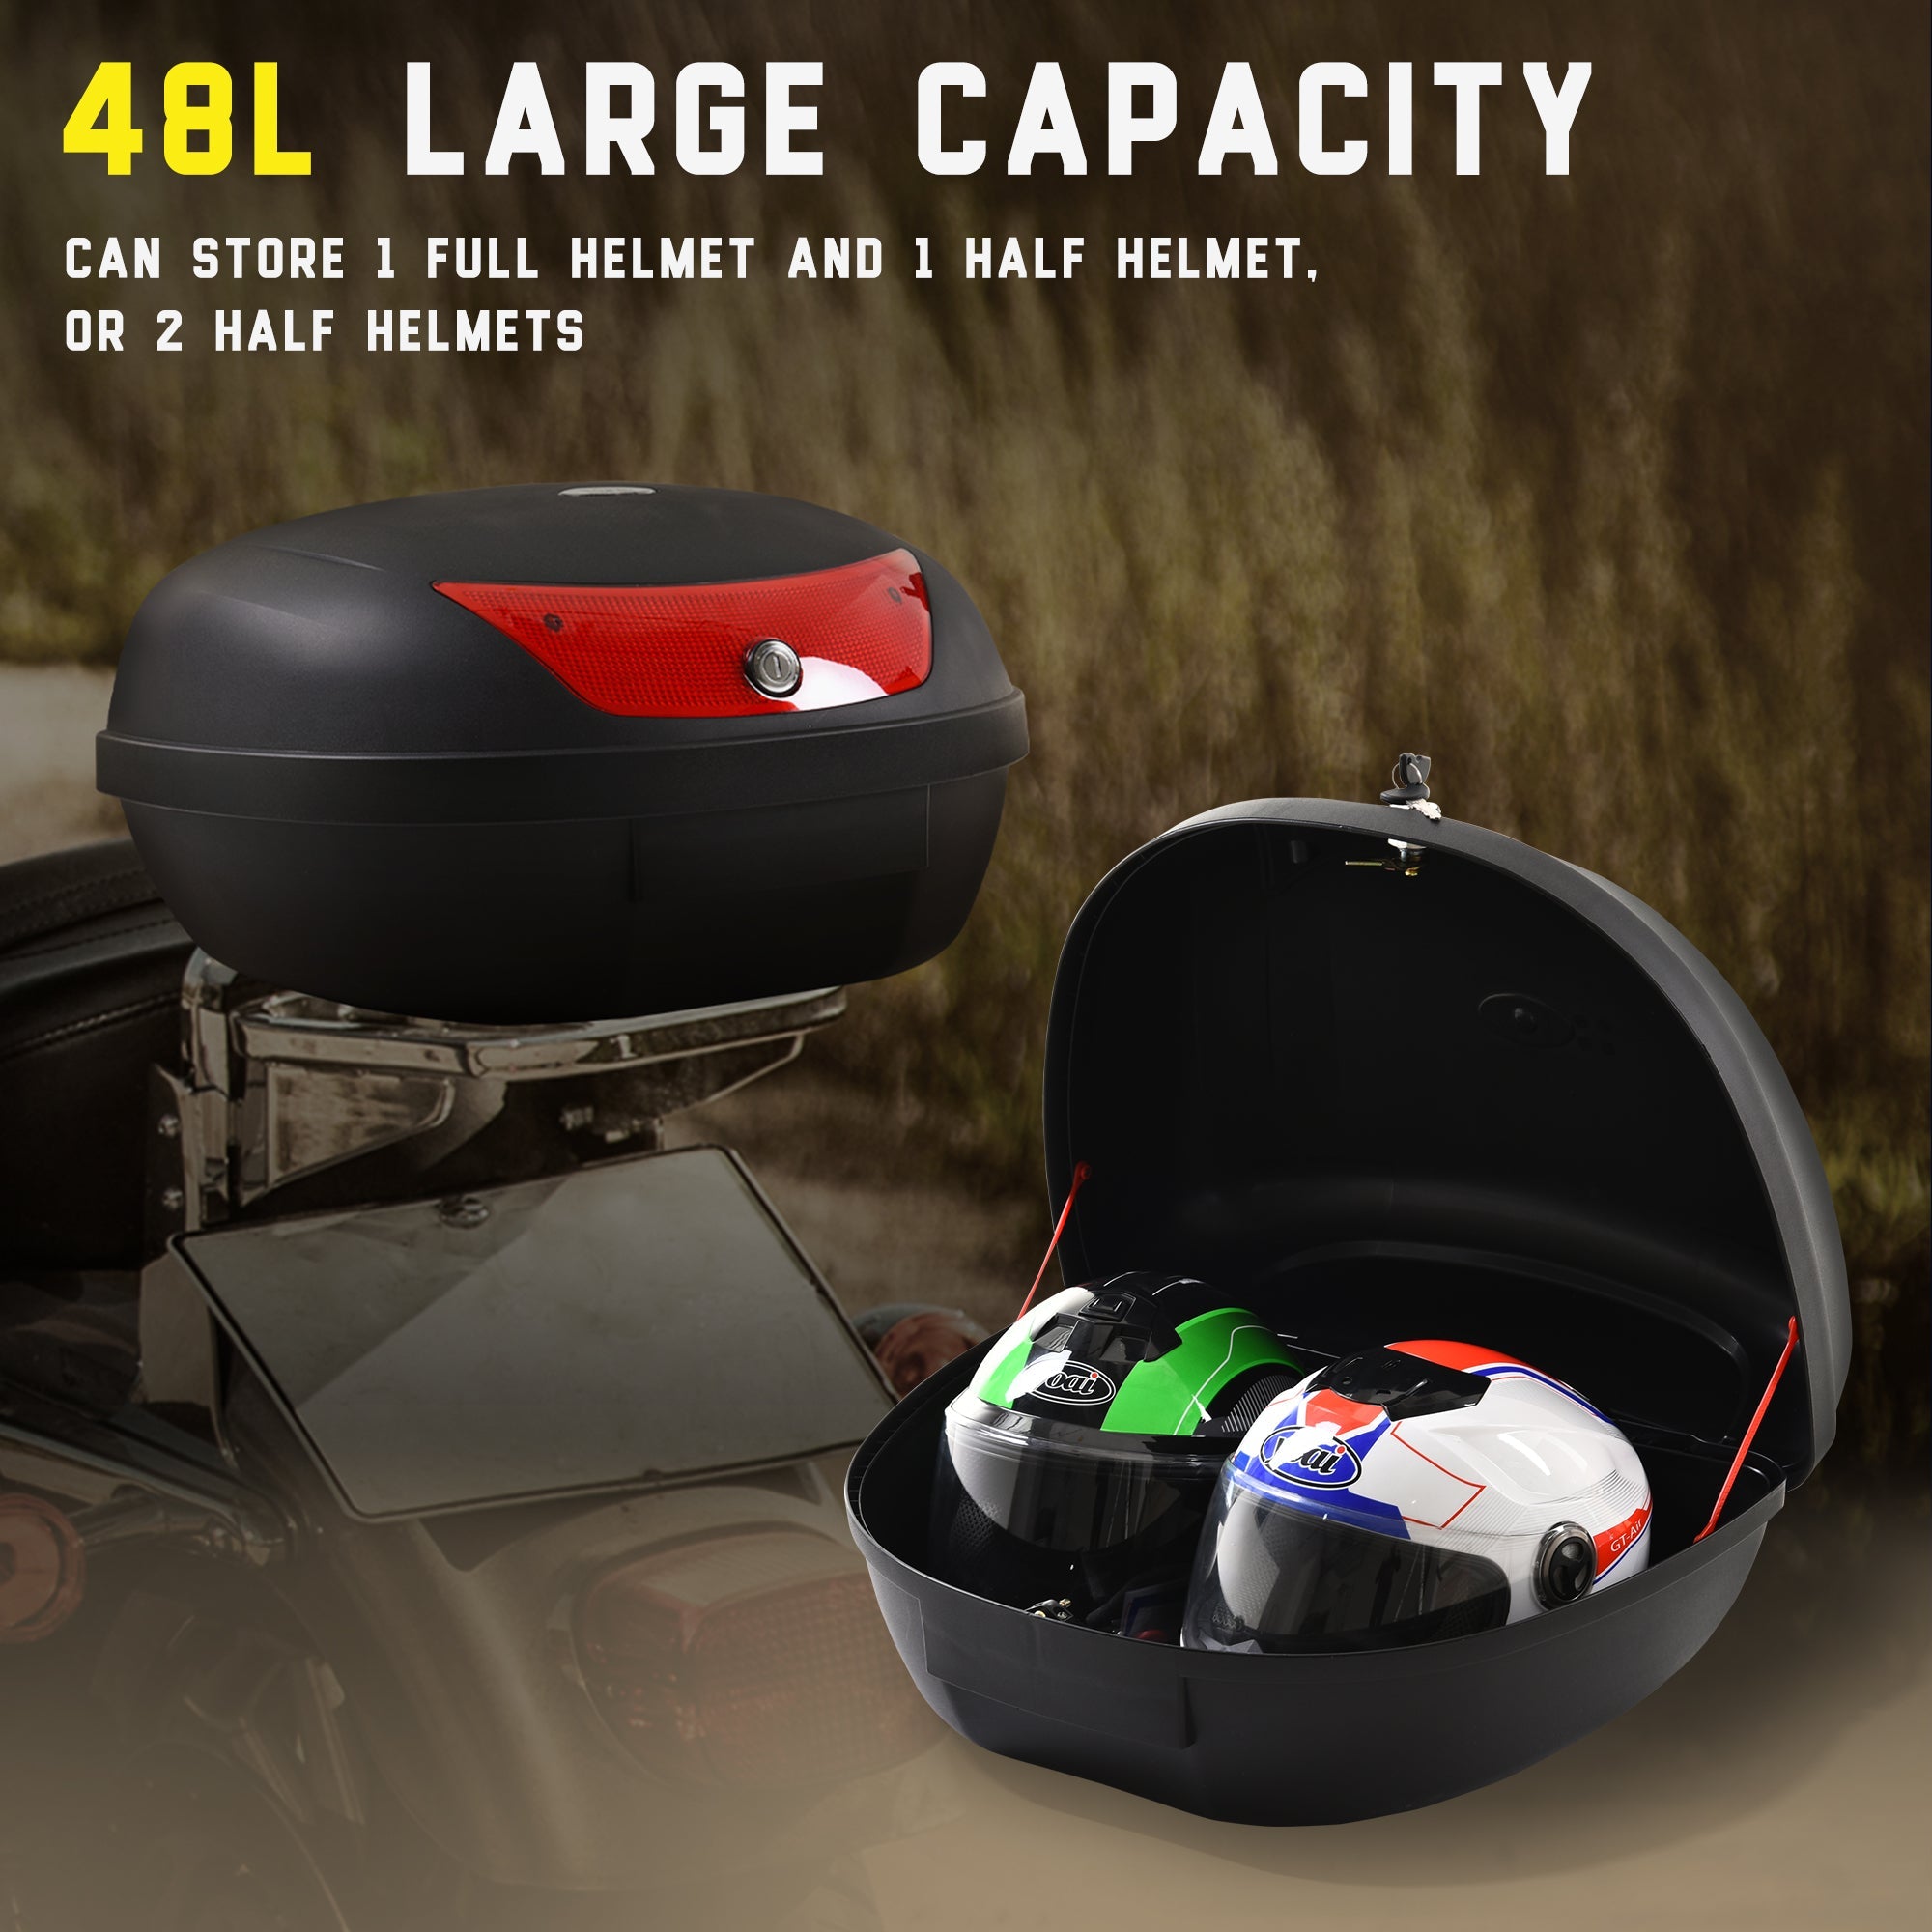 48L Motorcycke Trunk Travel Luggage Storage Box, Can Store Helmet-3